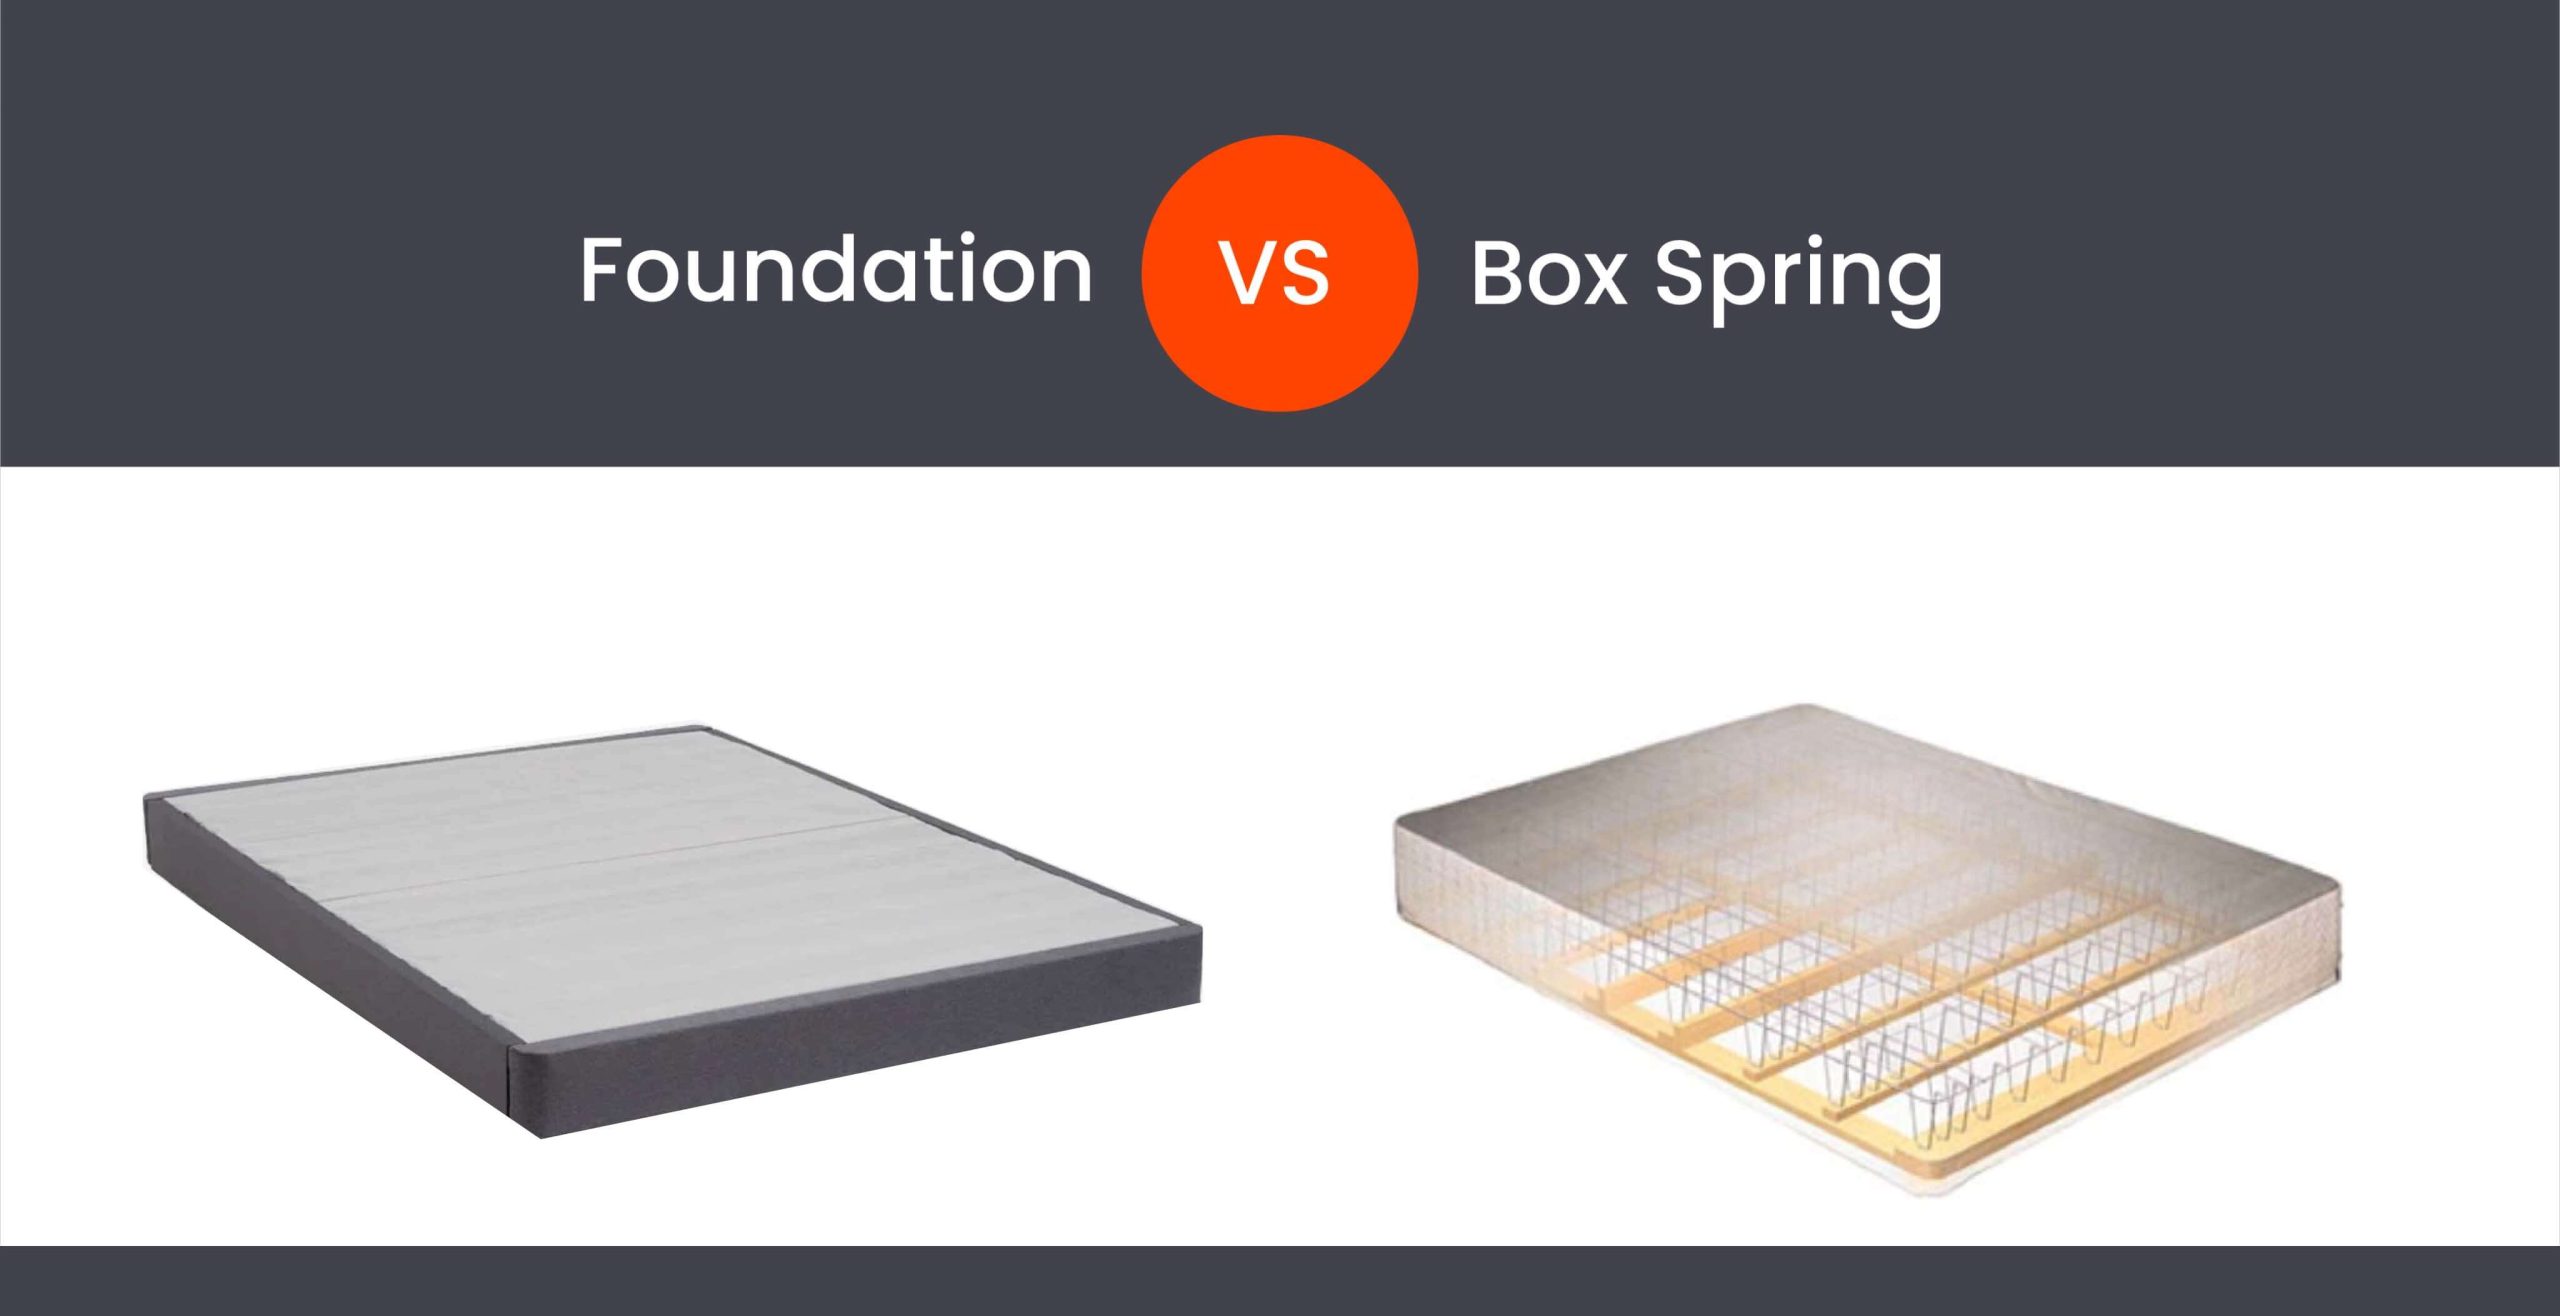 Visual depiction comparing a foundation vs. box spring